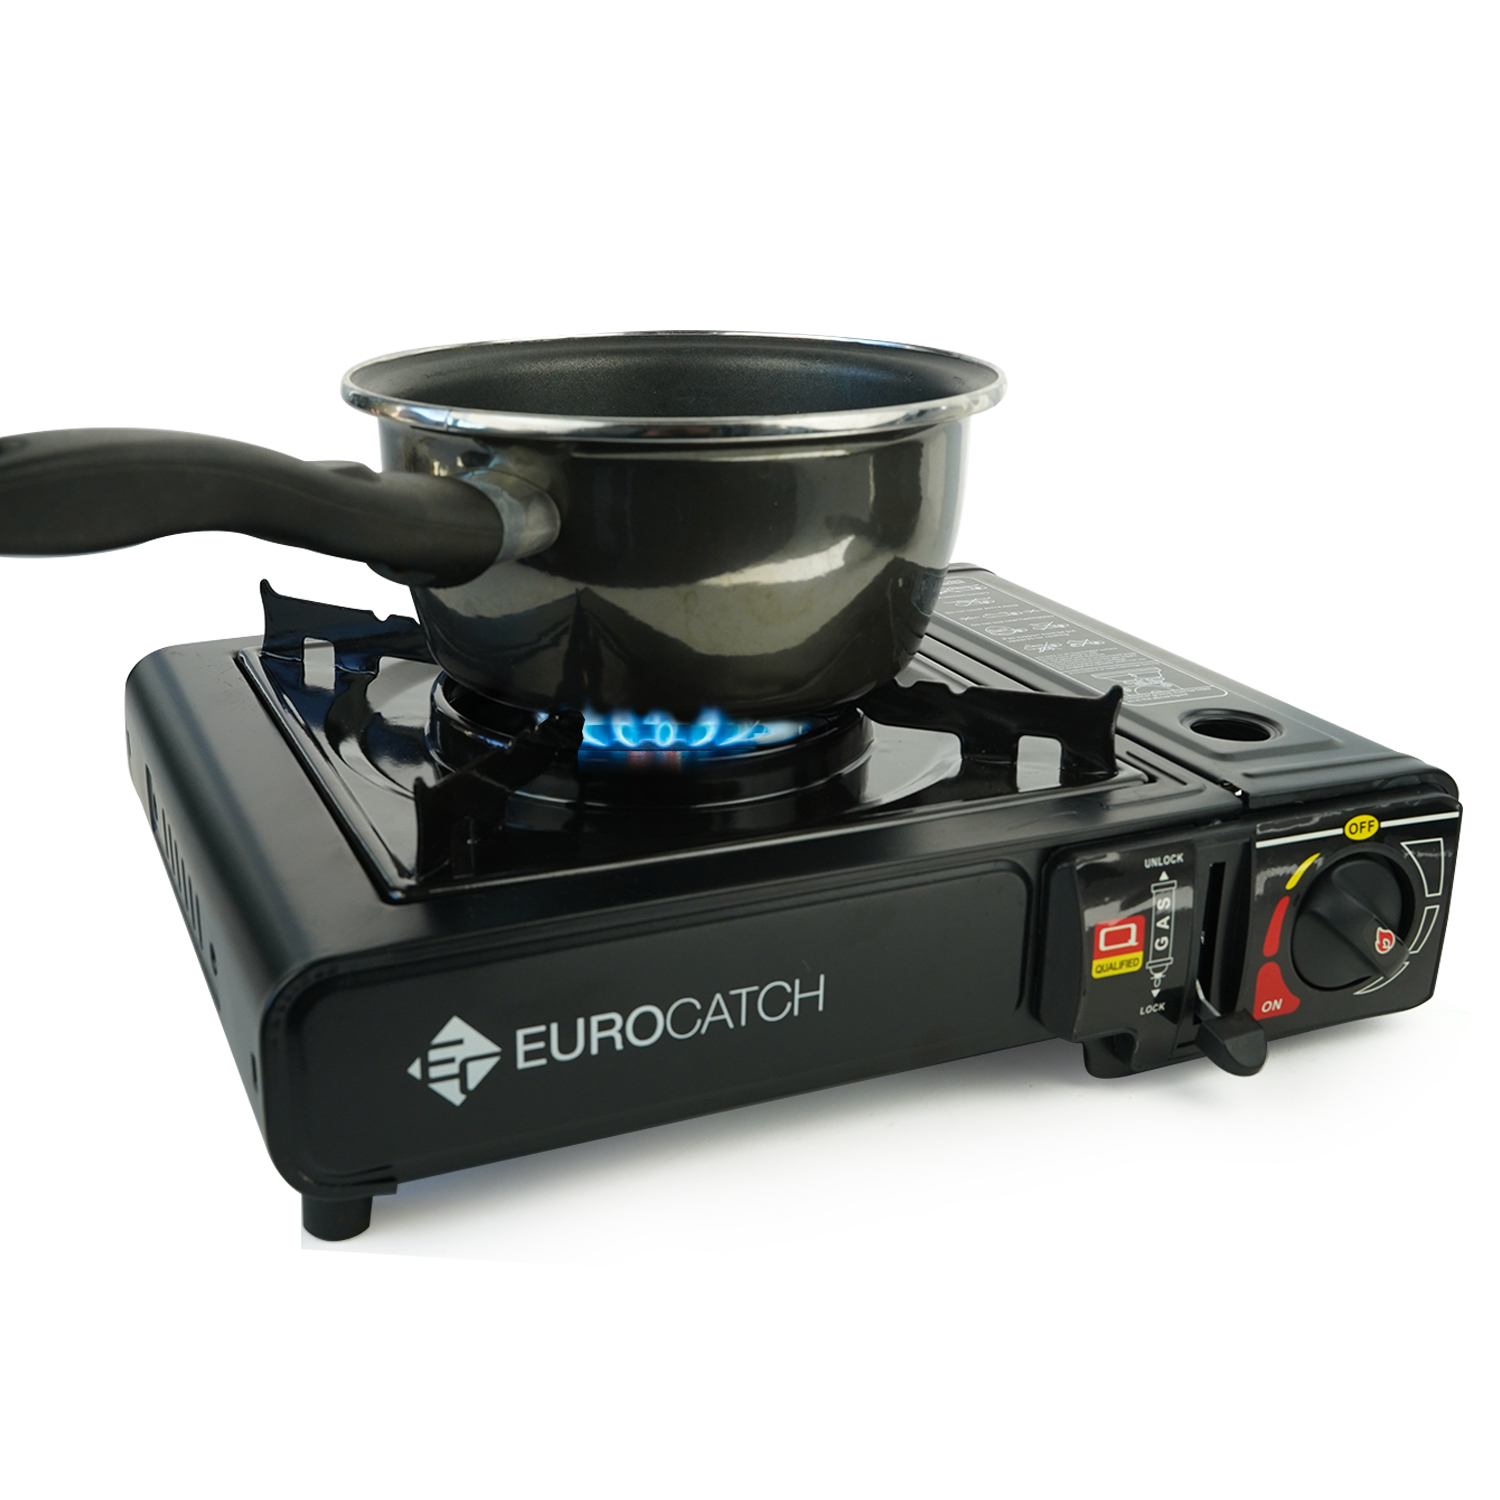 Eurocatch Gas Stove | Kooktoestel op gas | Incl. Elektronische ontsteking en Draagkoffer